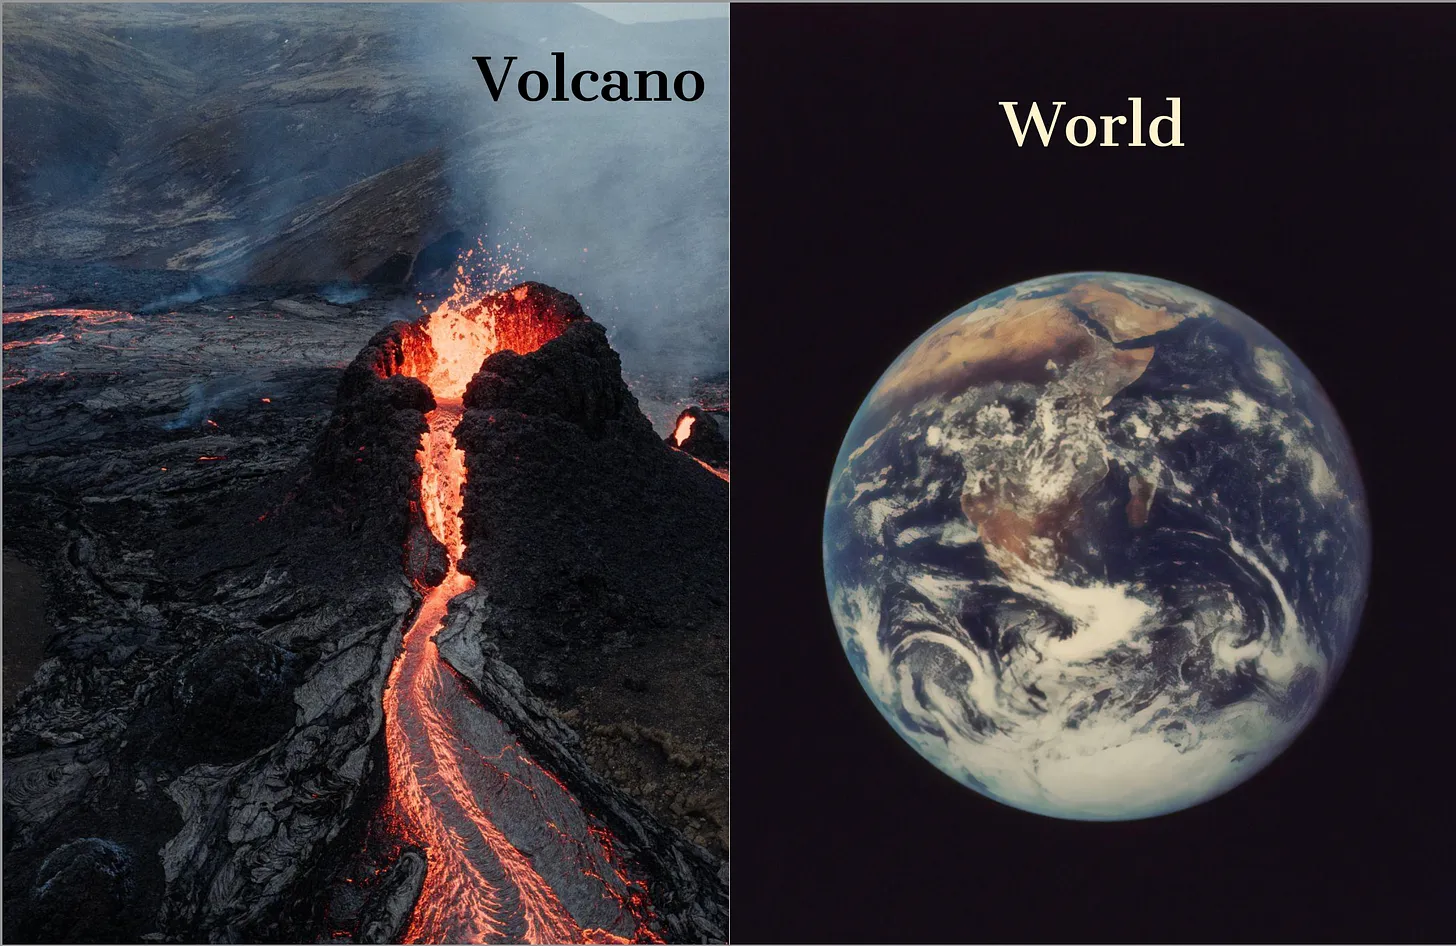 Volcano and world